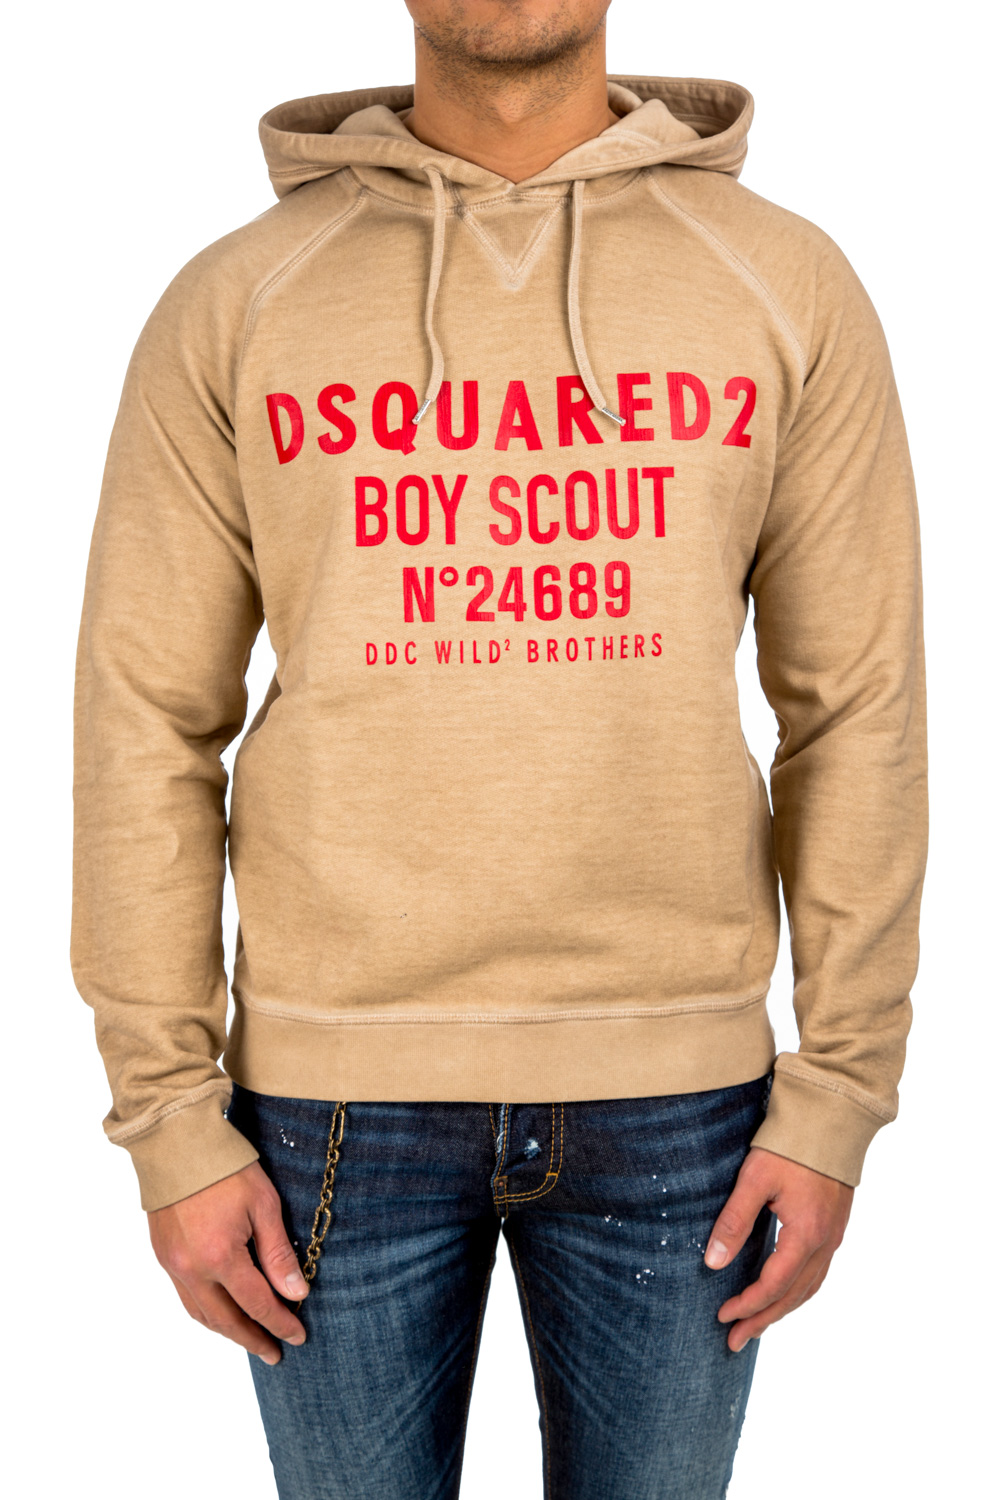 dsquared boy scout